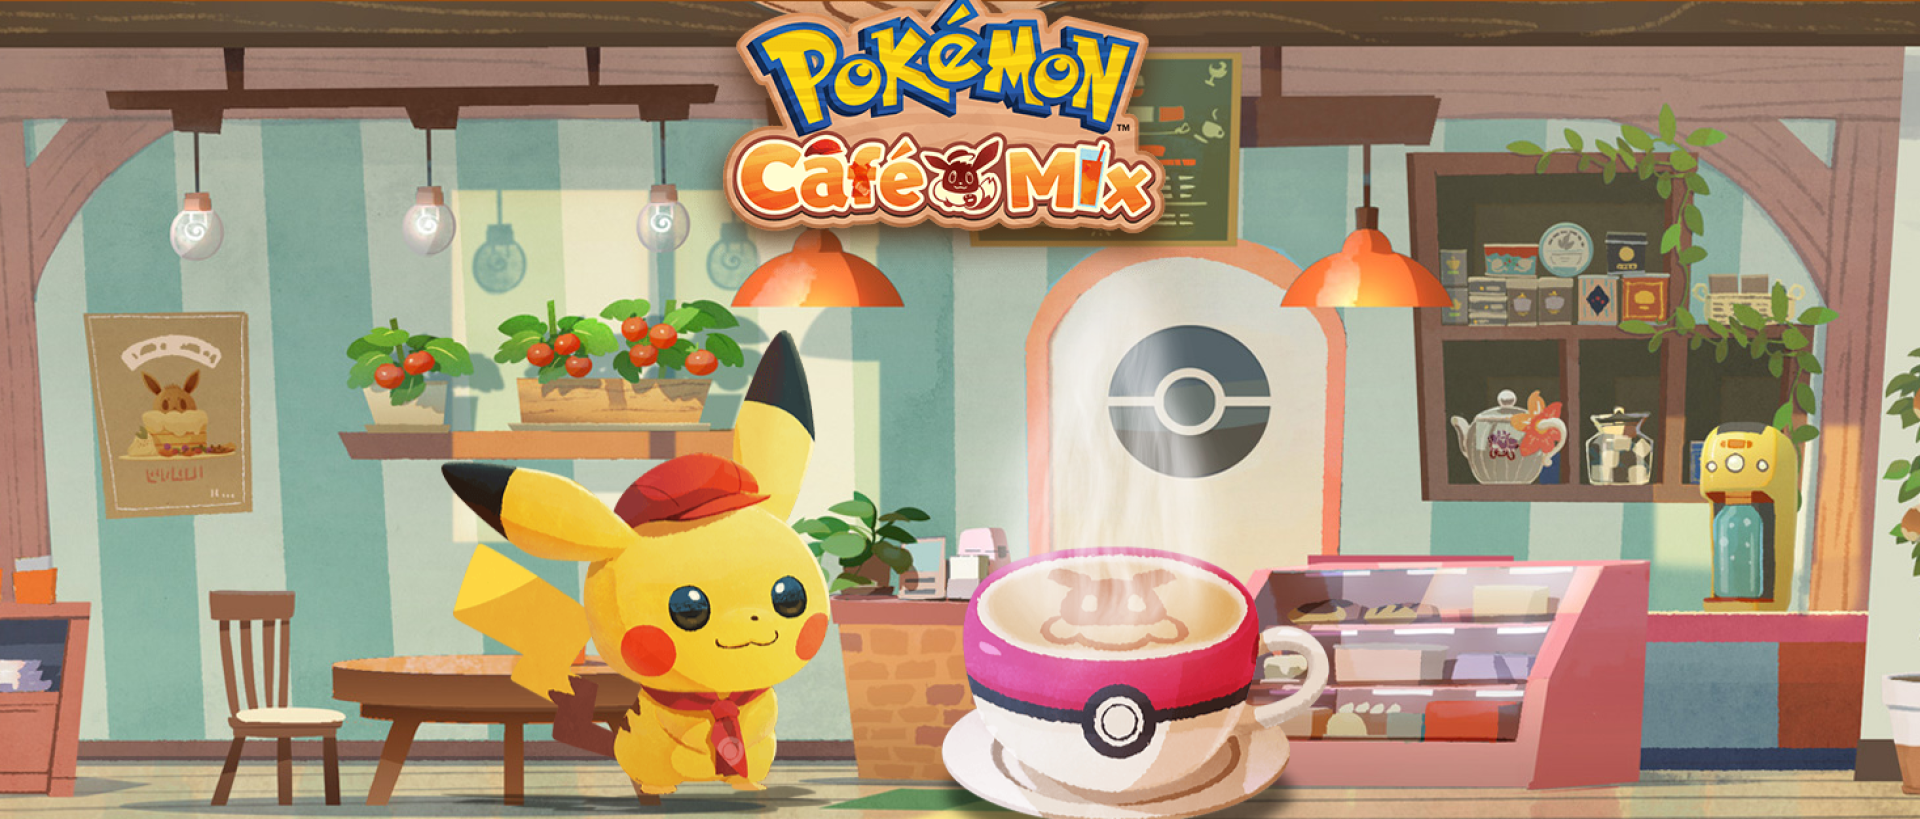 Download & Play Pokémon Café Mix on PC & Mac with NoxPlayer (Emulator)